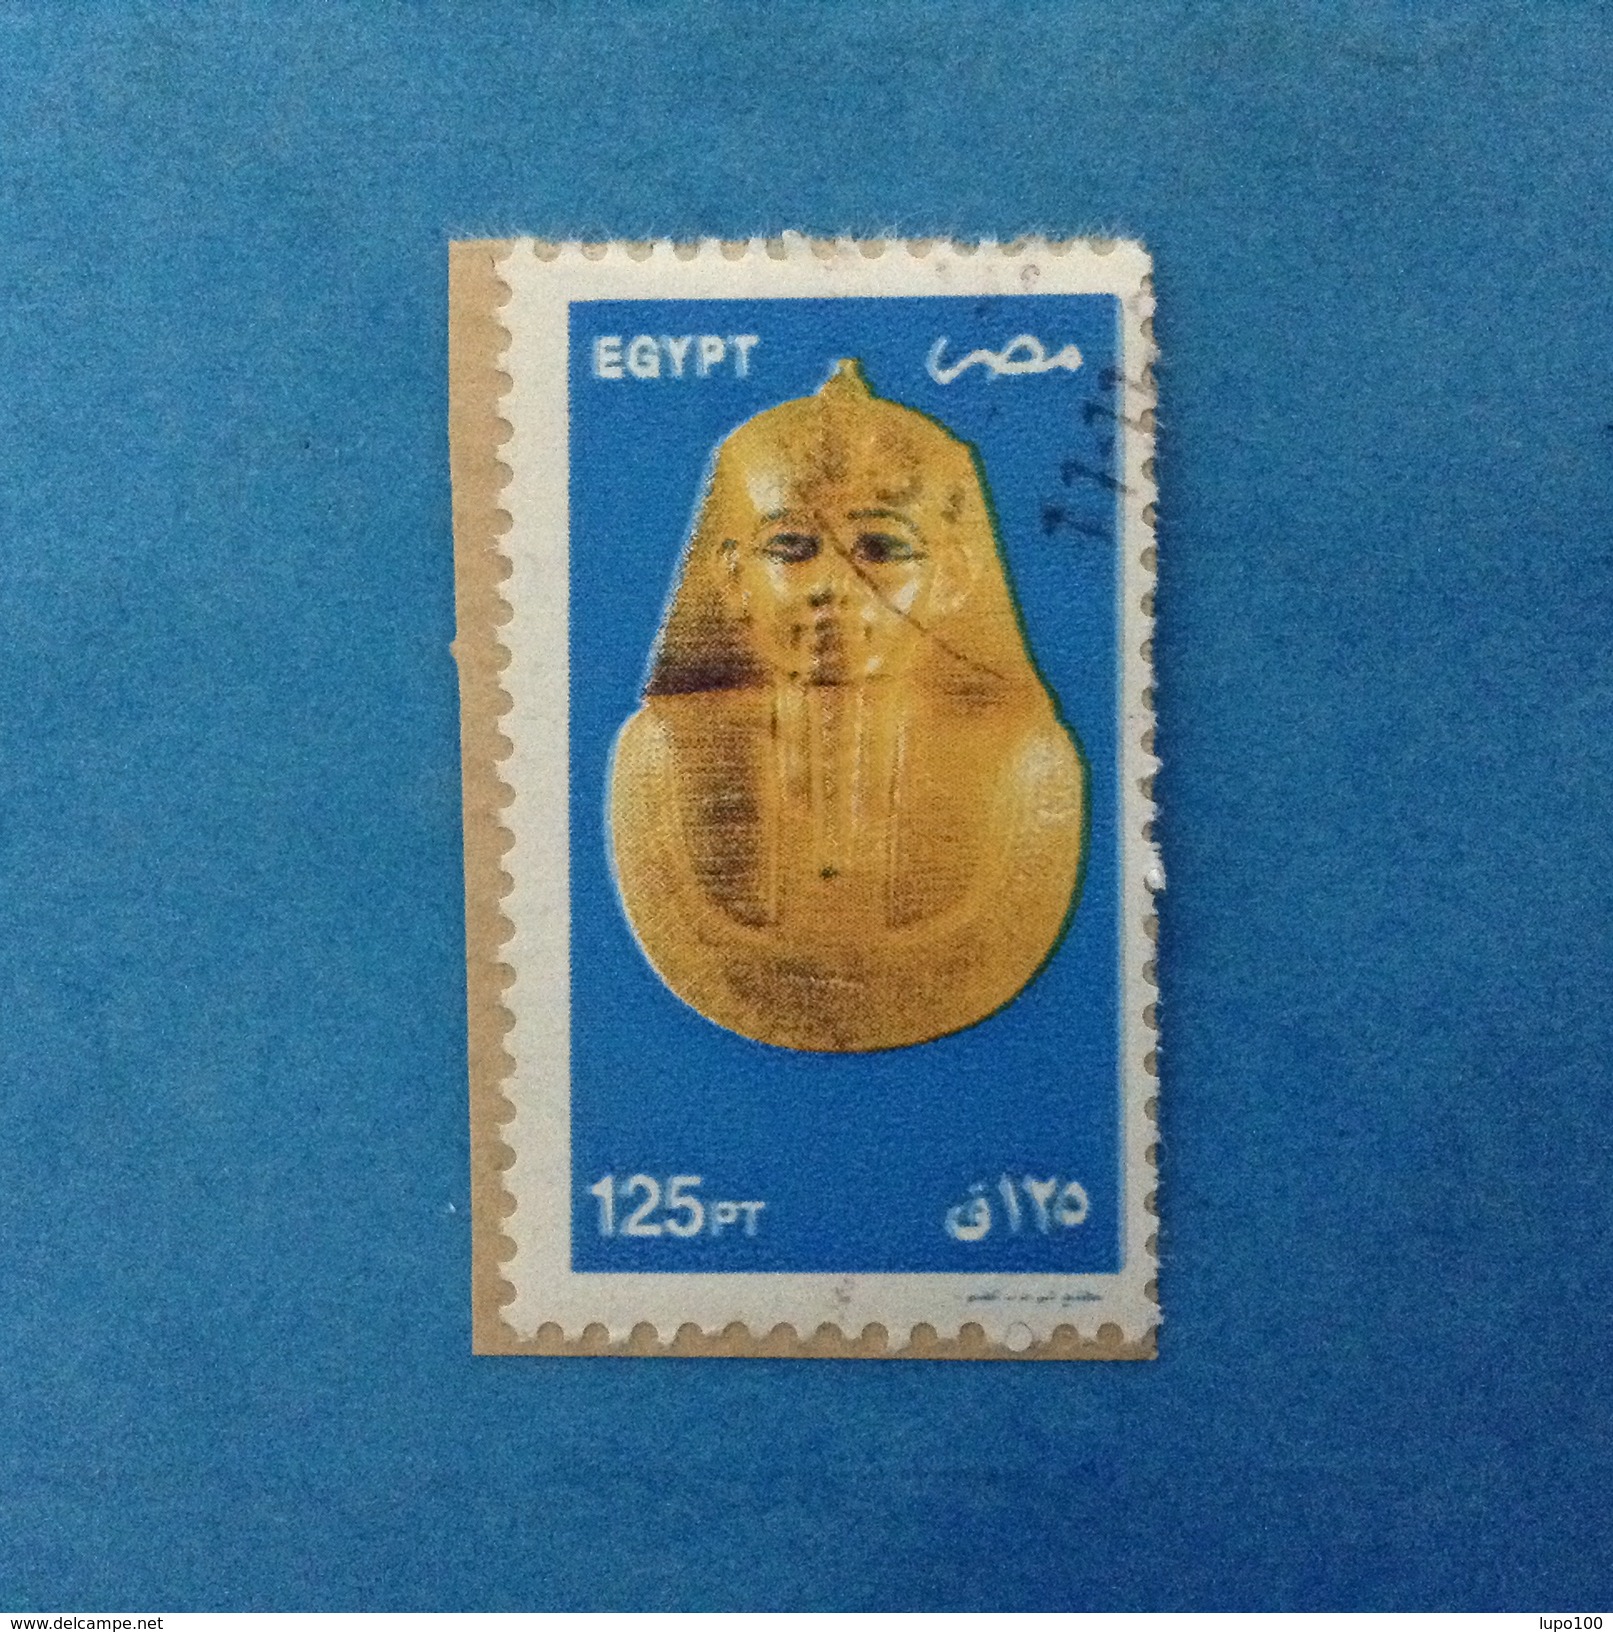 2002 EGITTO EGYPT FRANCOBOLLO USATO STAMP USED - MASCHERA FARAONE 125 - Oblitérés